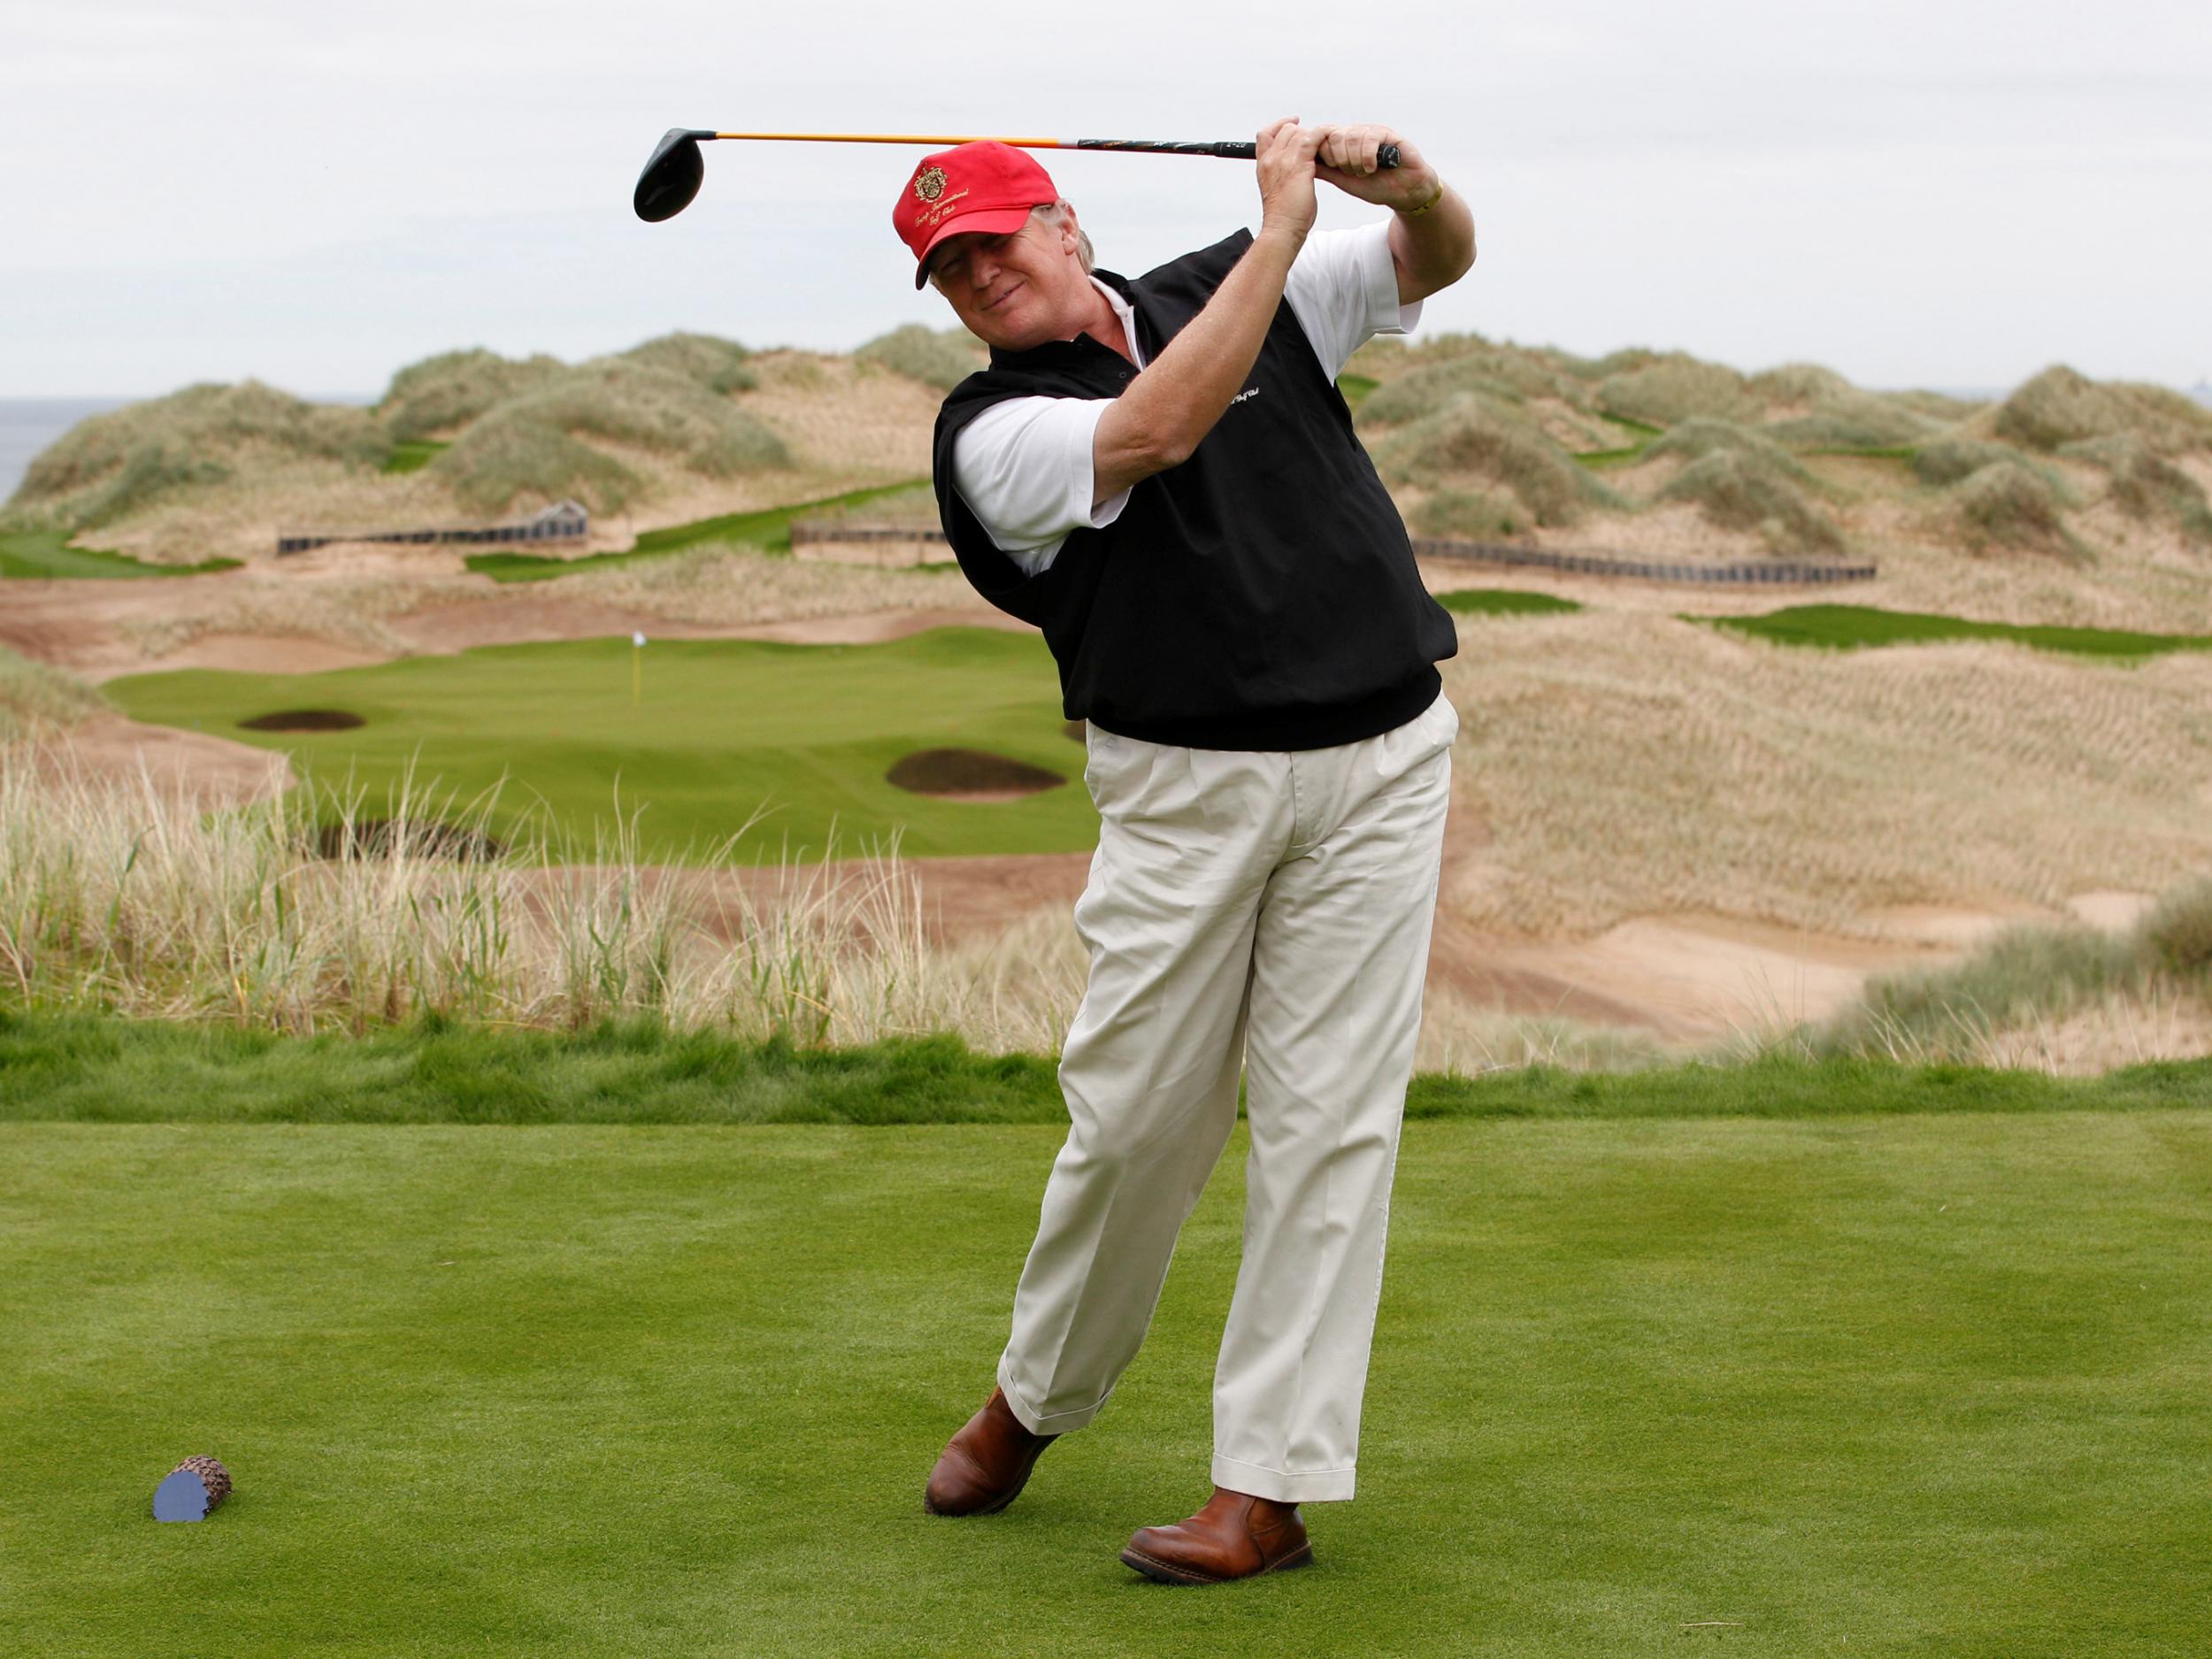 Donald Trump practices his swing